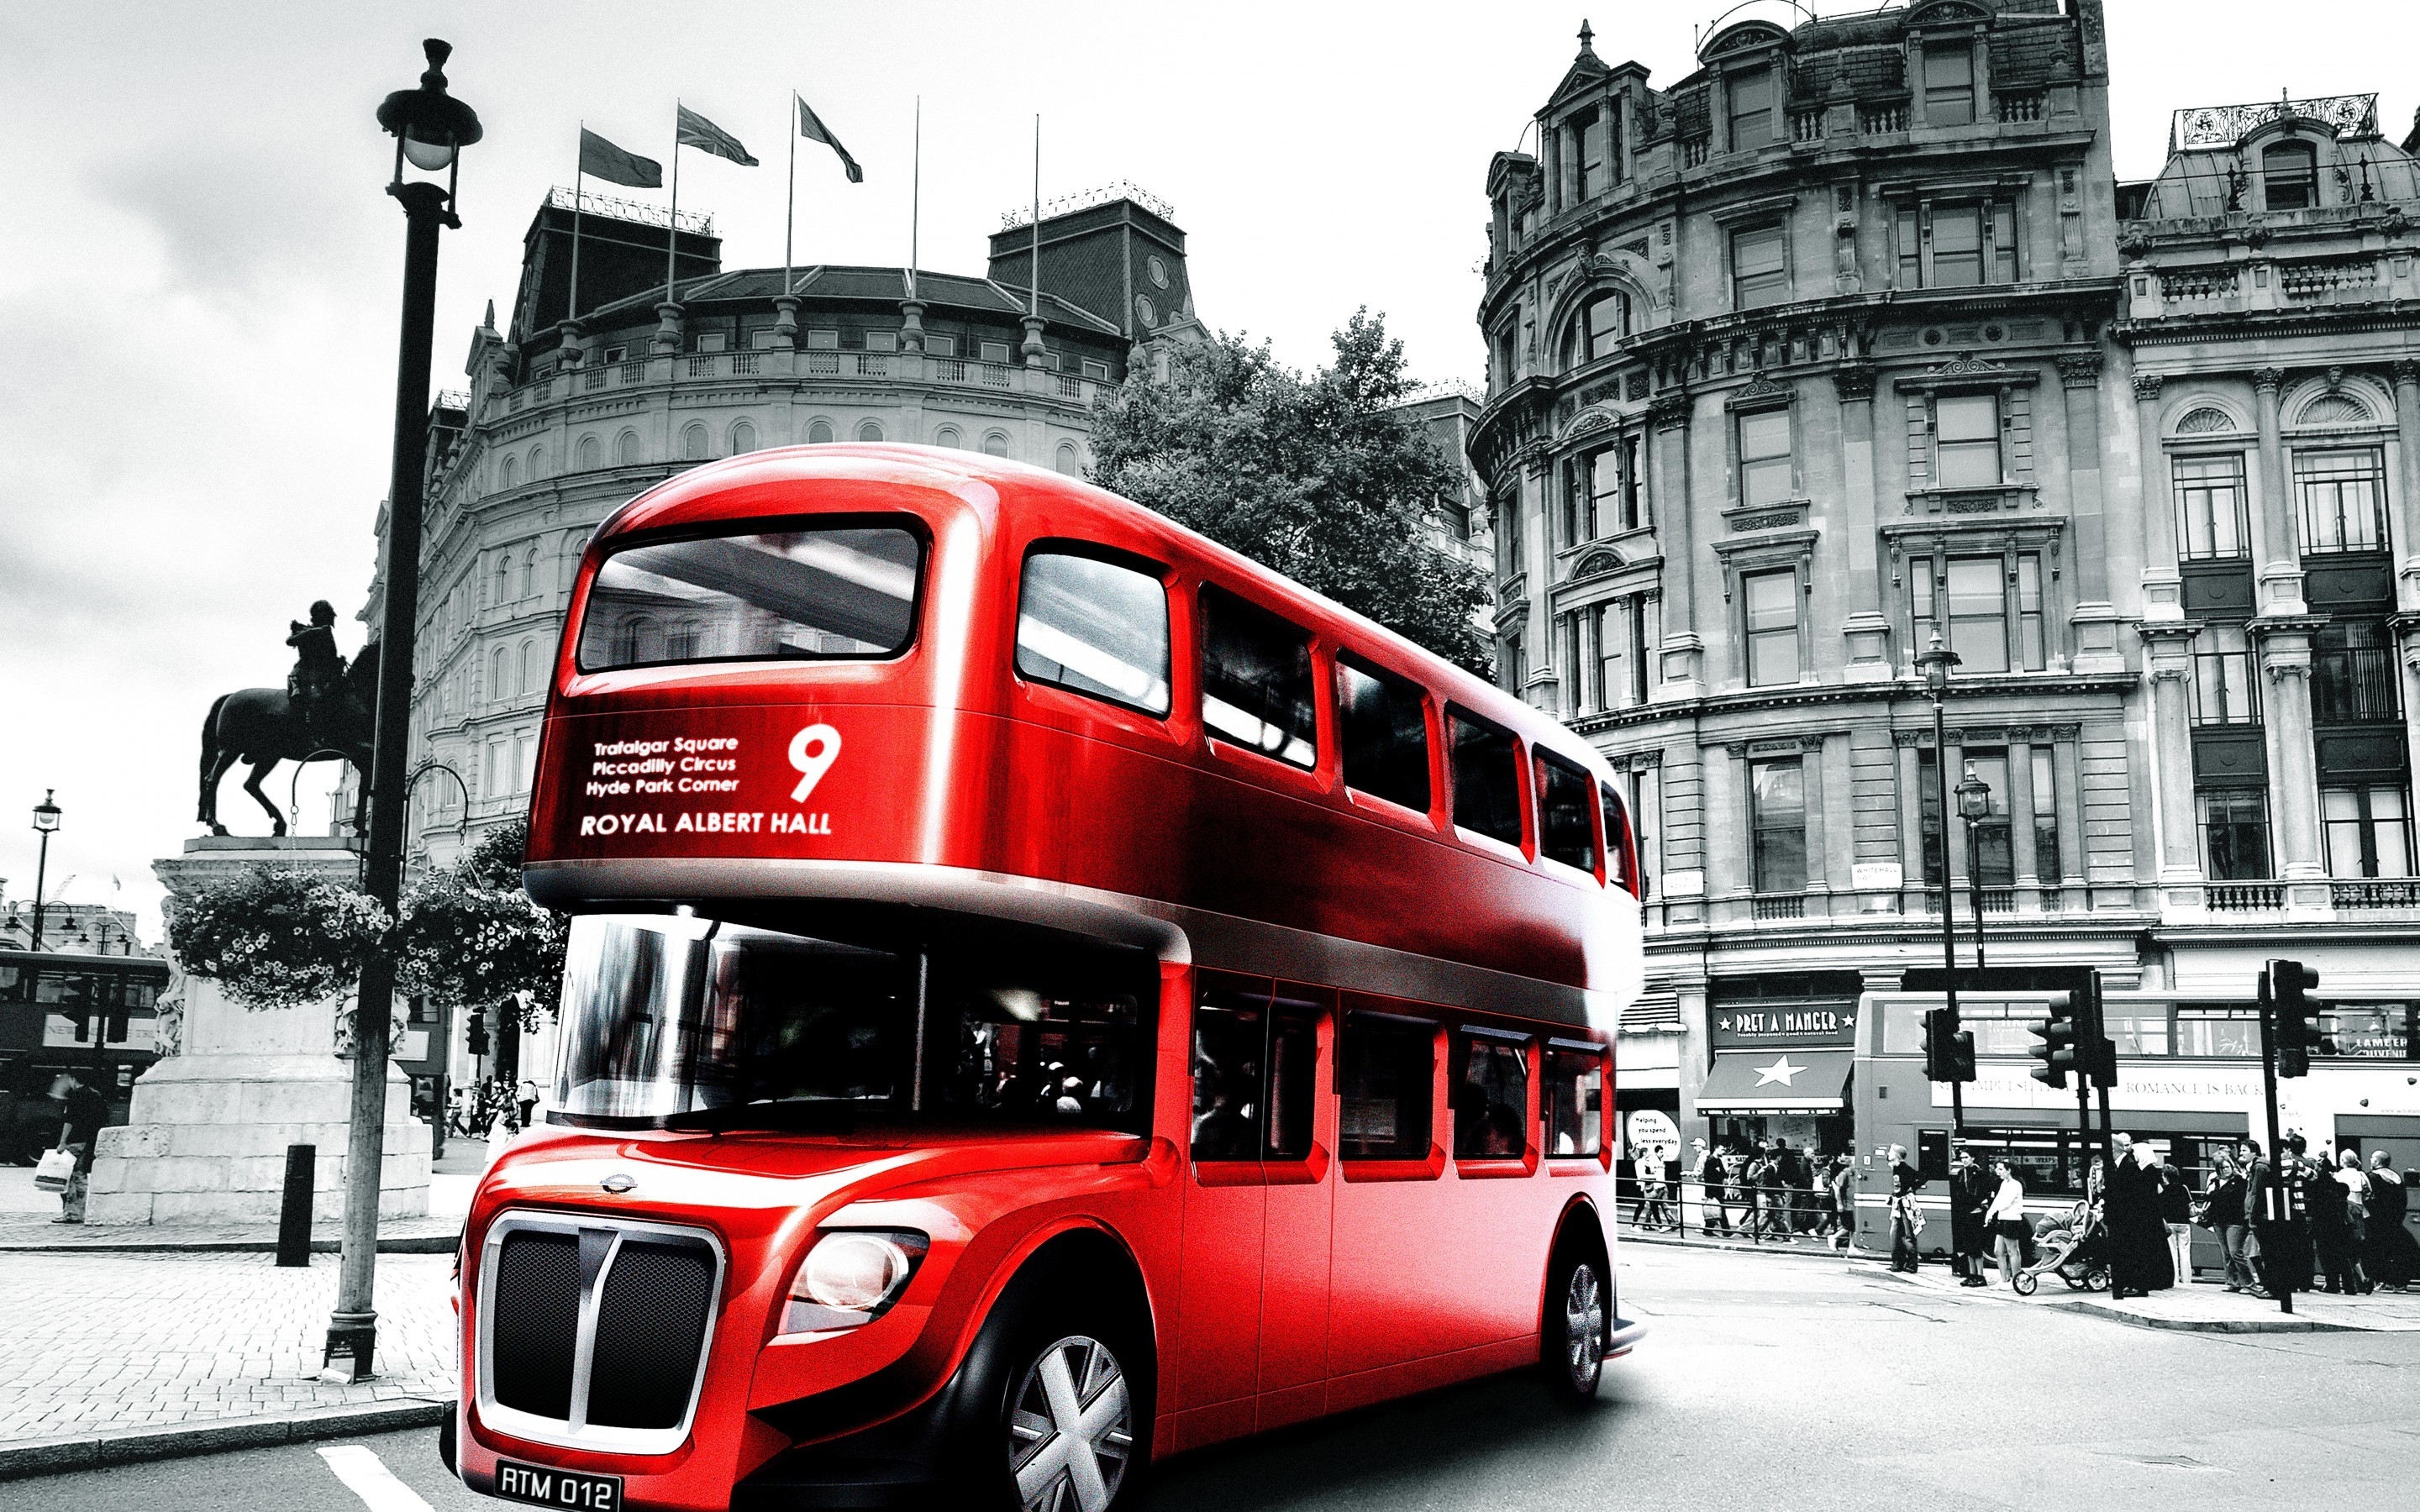 London Bus Design for 2880 x 1800 Retina Display resolution